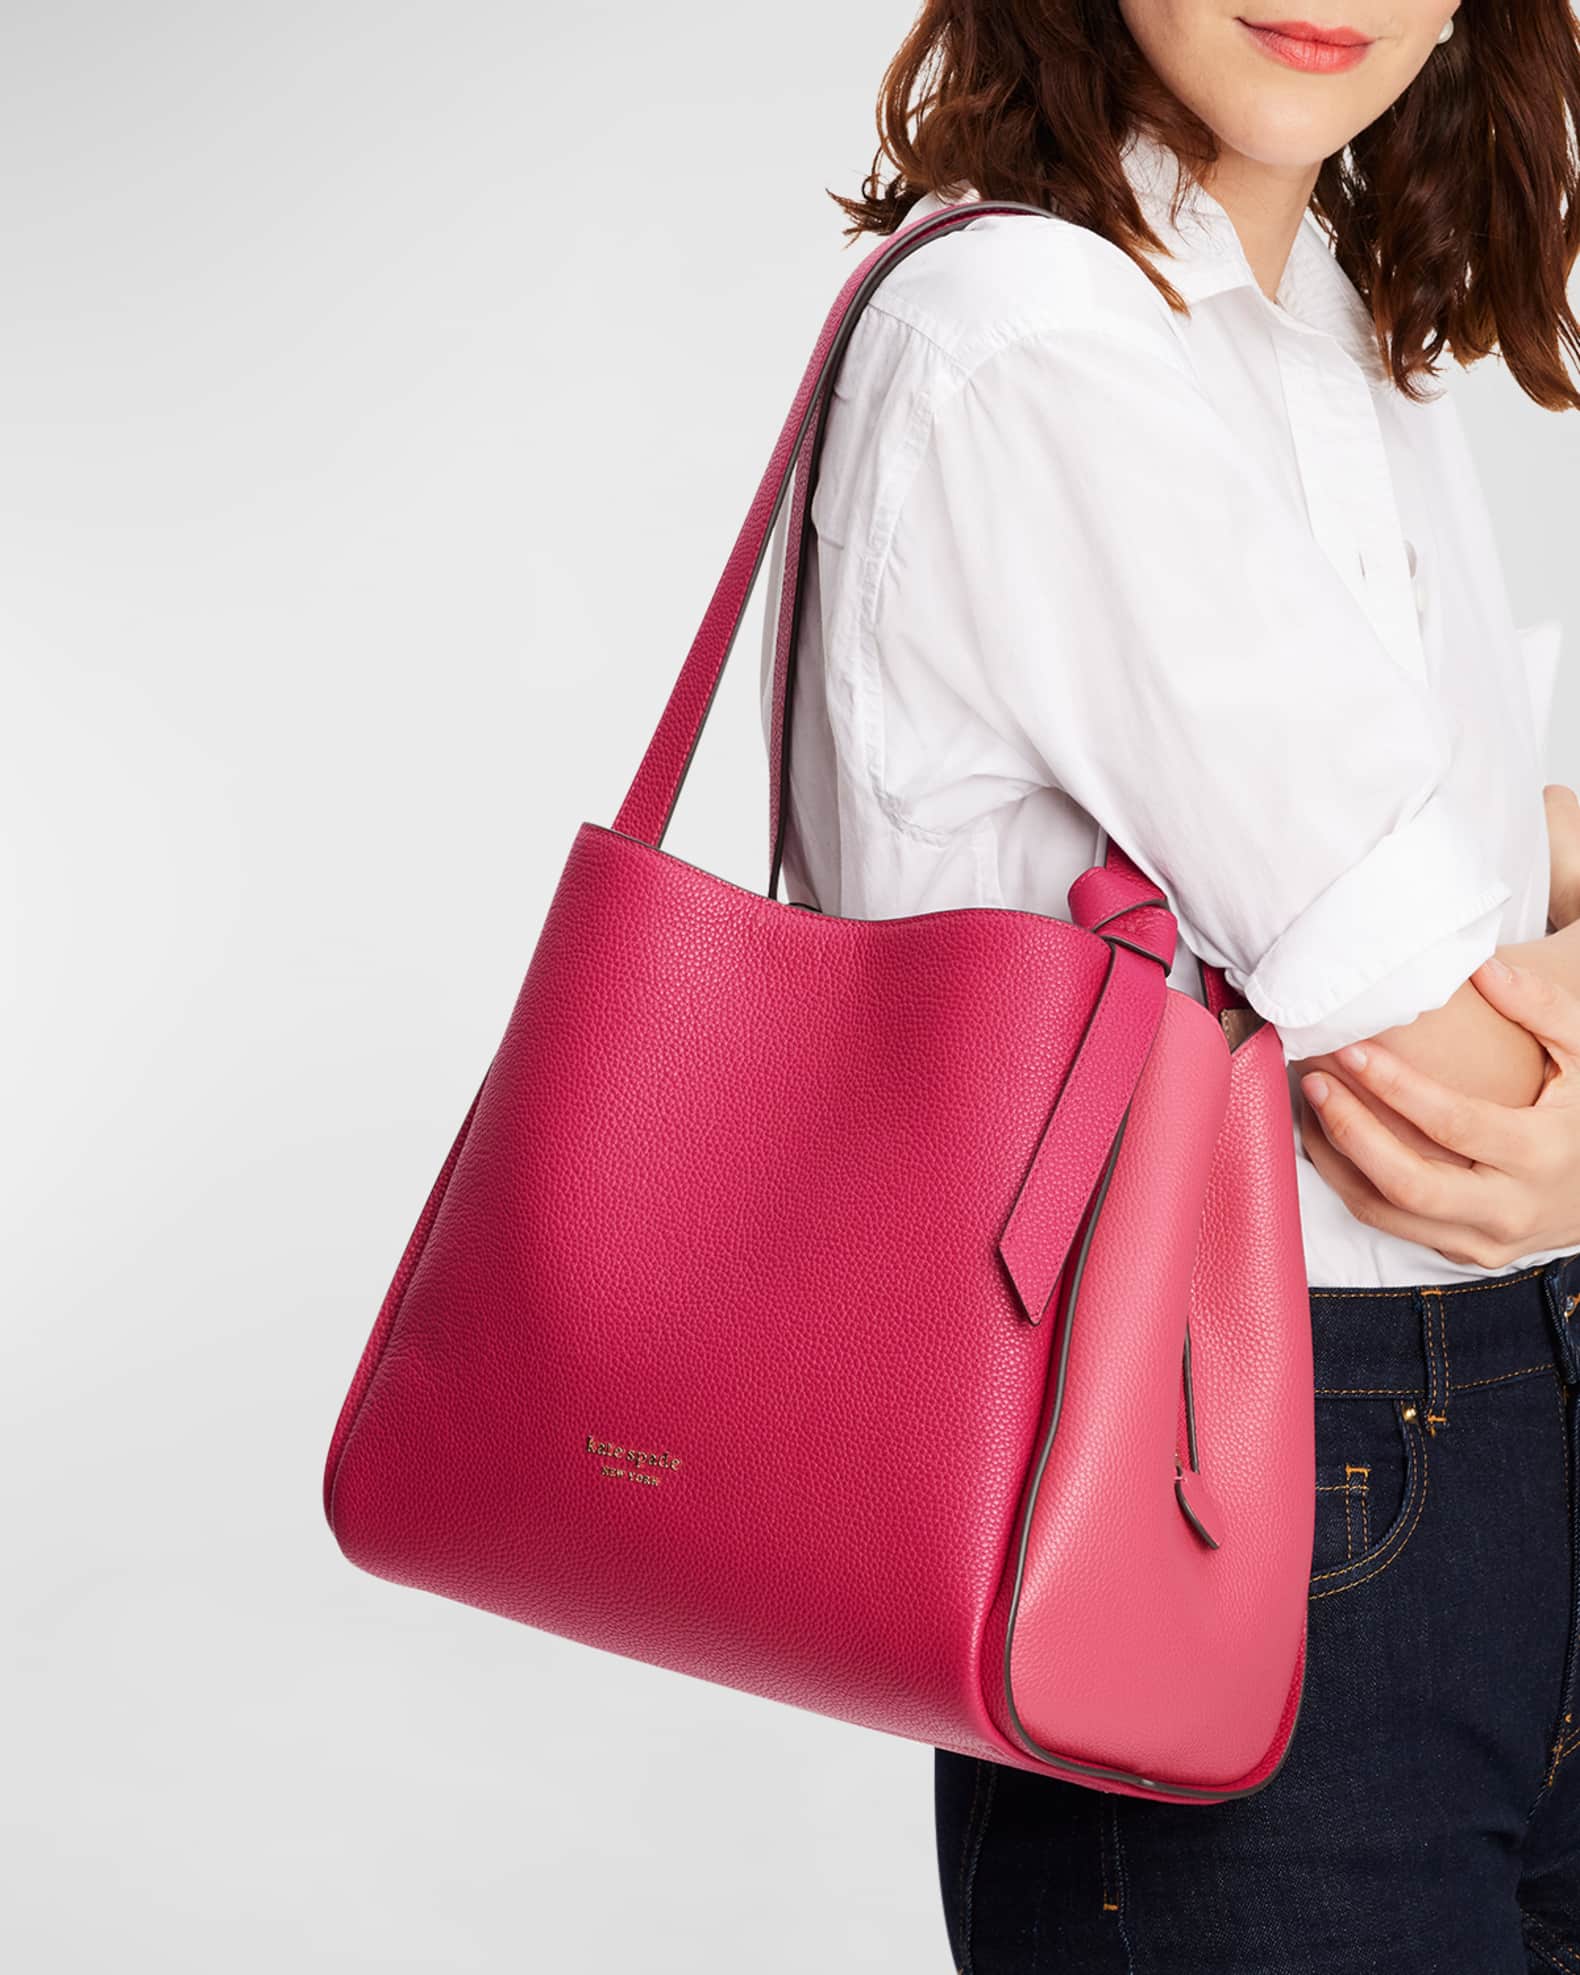 Neiman Marcus Women's Bag - Multi